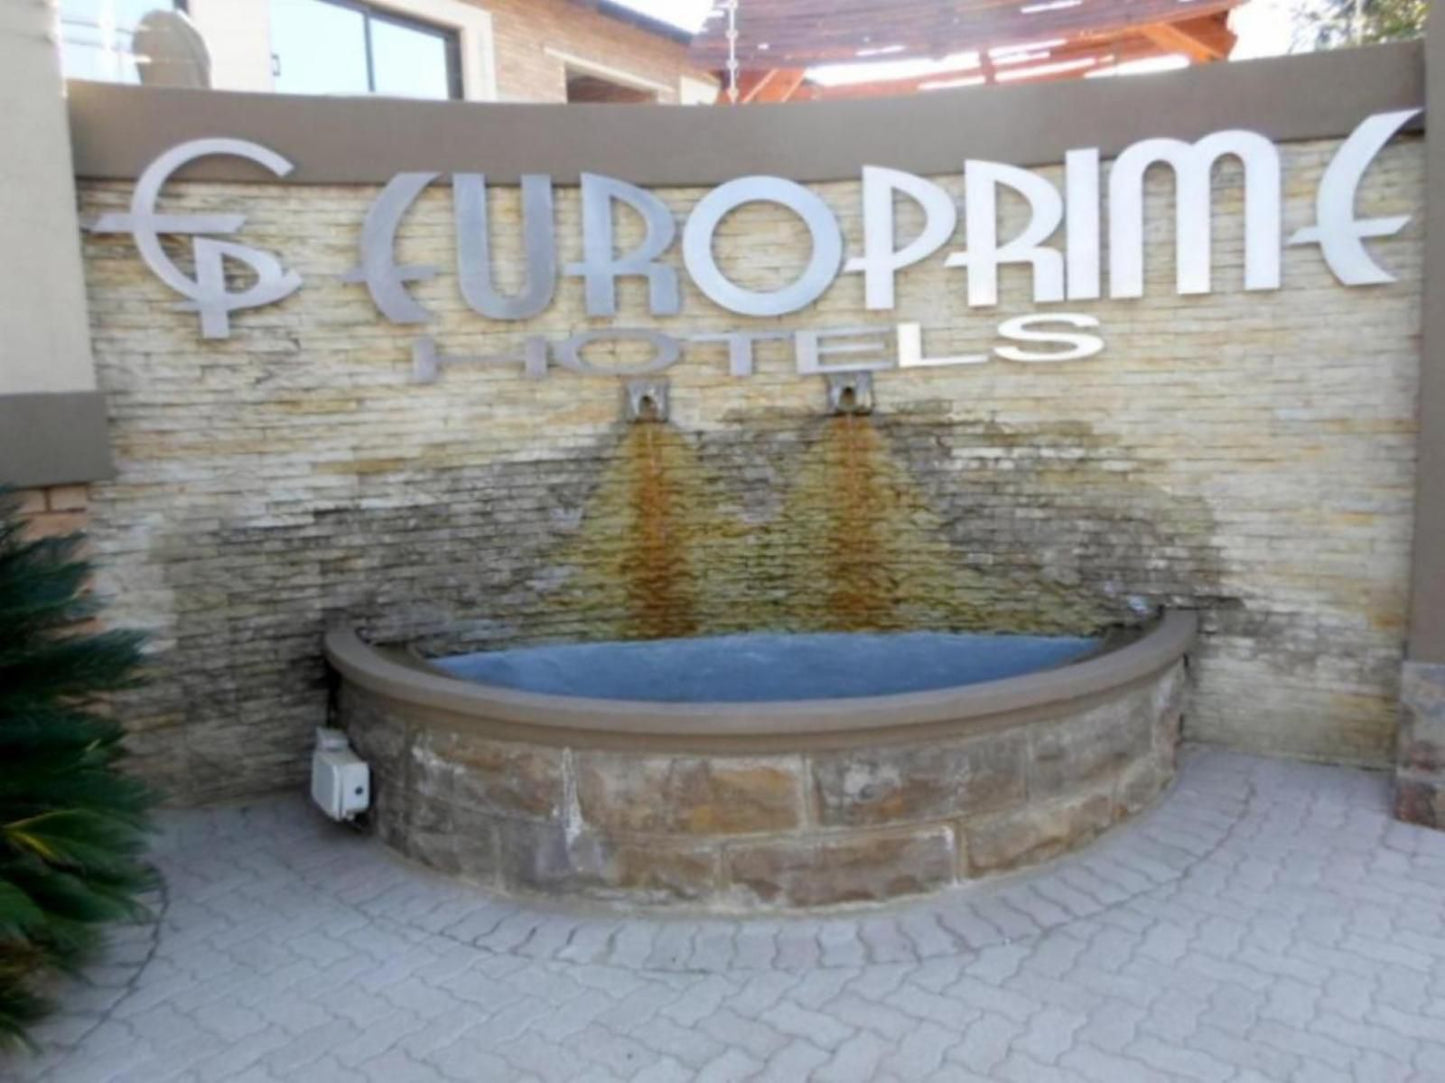 Europrime Hotel Boksburg Johannesburg Gauteng South Africa Unsaturated